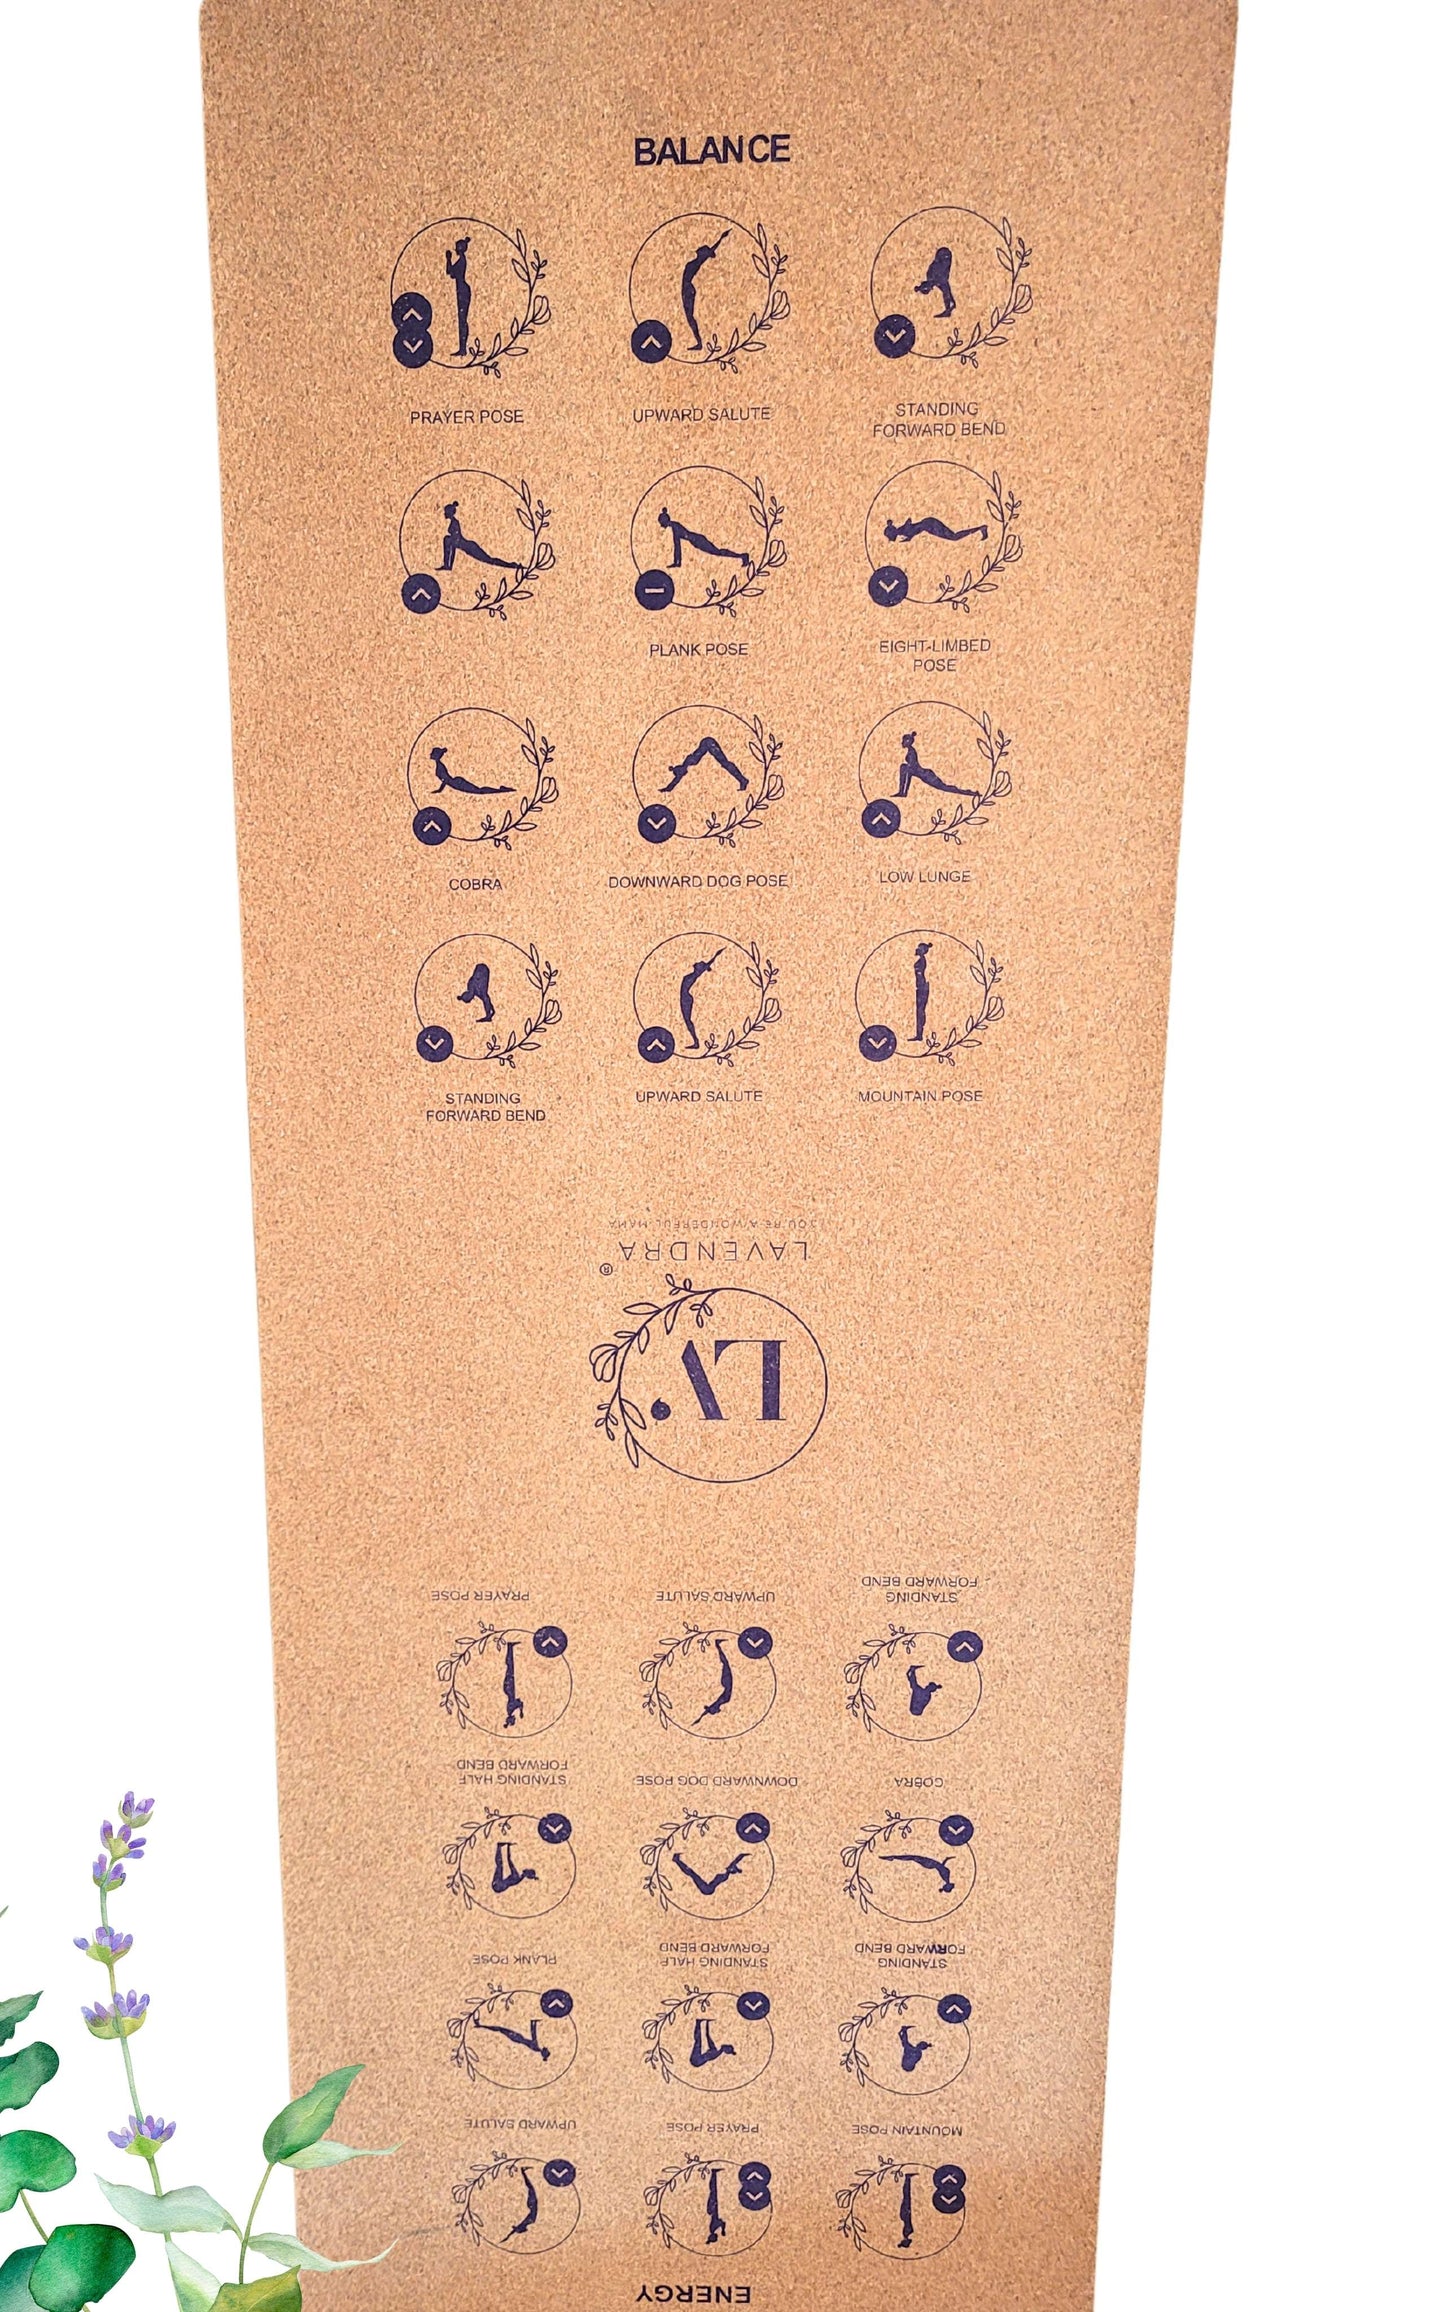 Yoga mat "ATHIRA" 100% cork/rubber